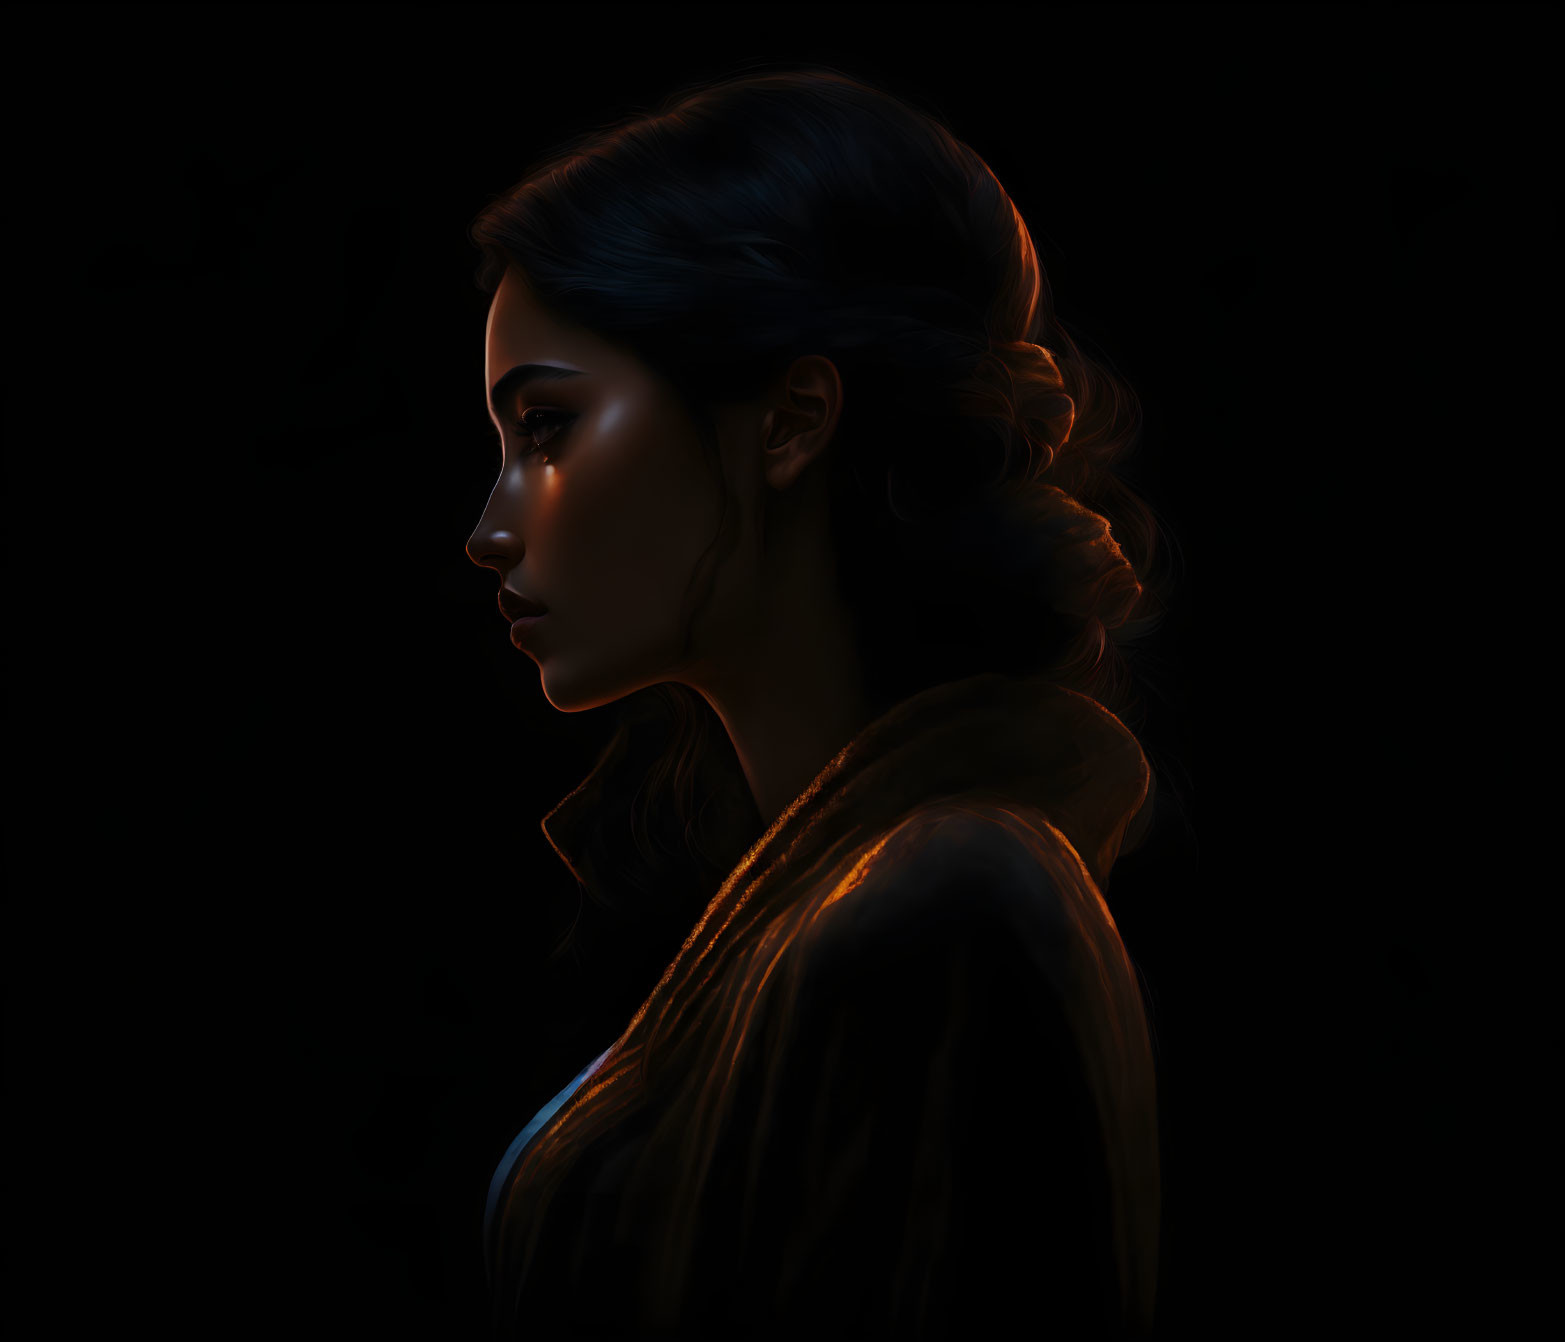 Portrait of Woman with Illuminated Edges on Dark Background